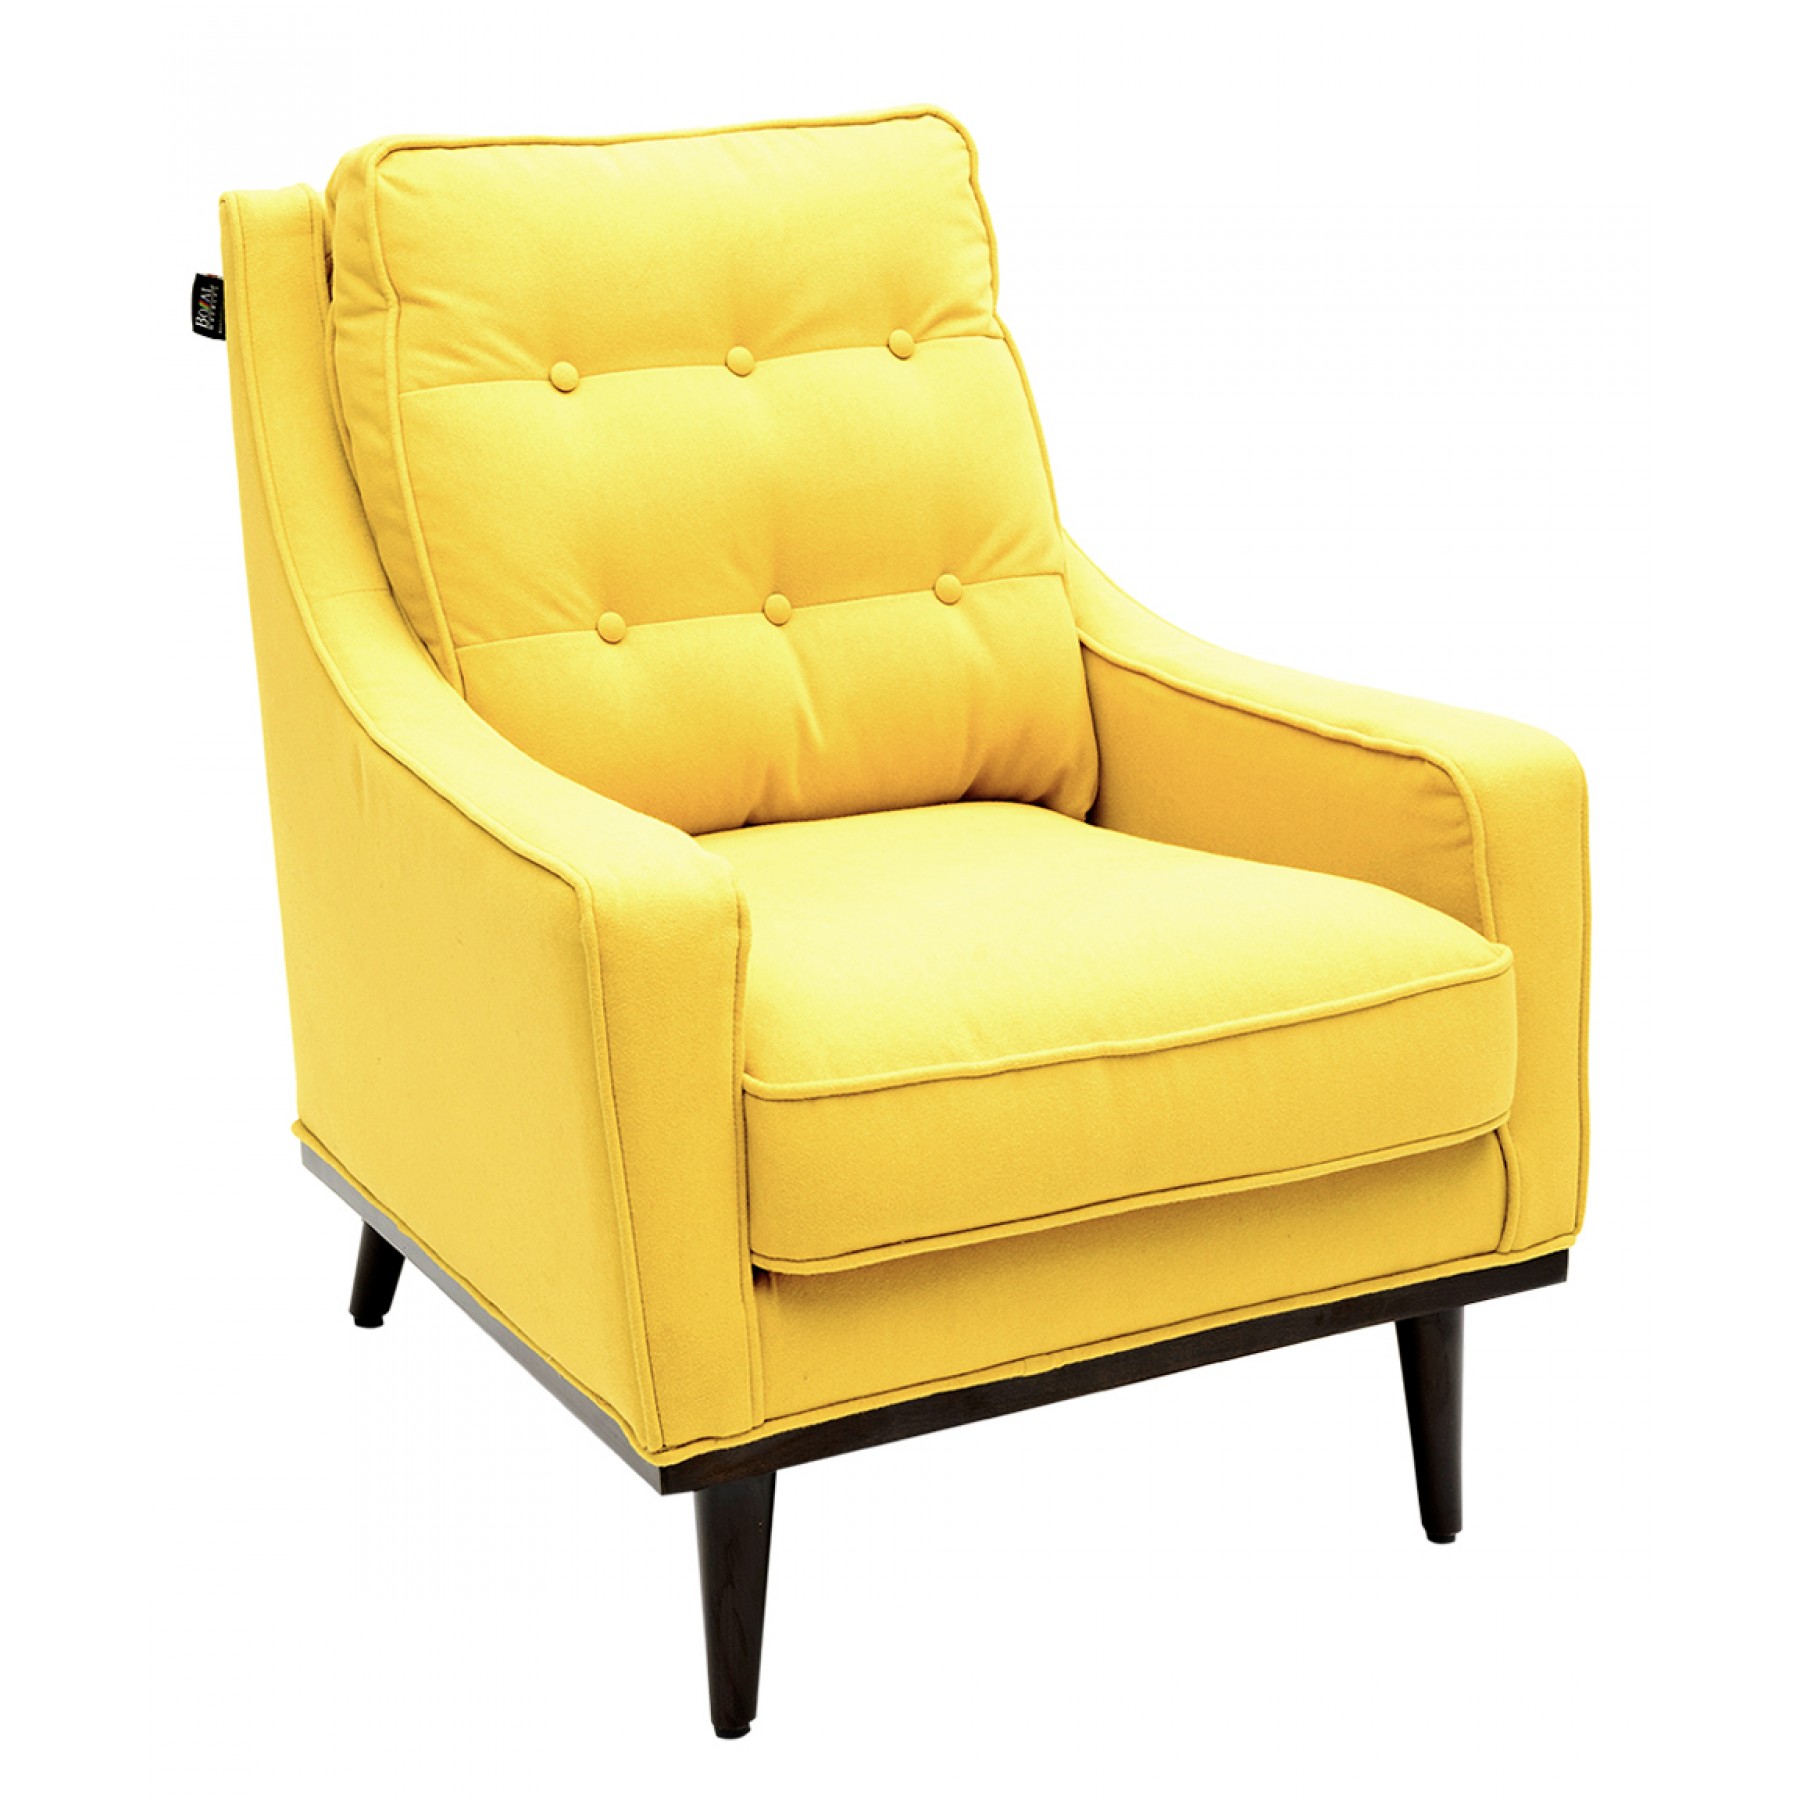 ikea yellow chair